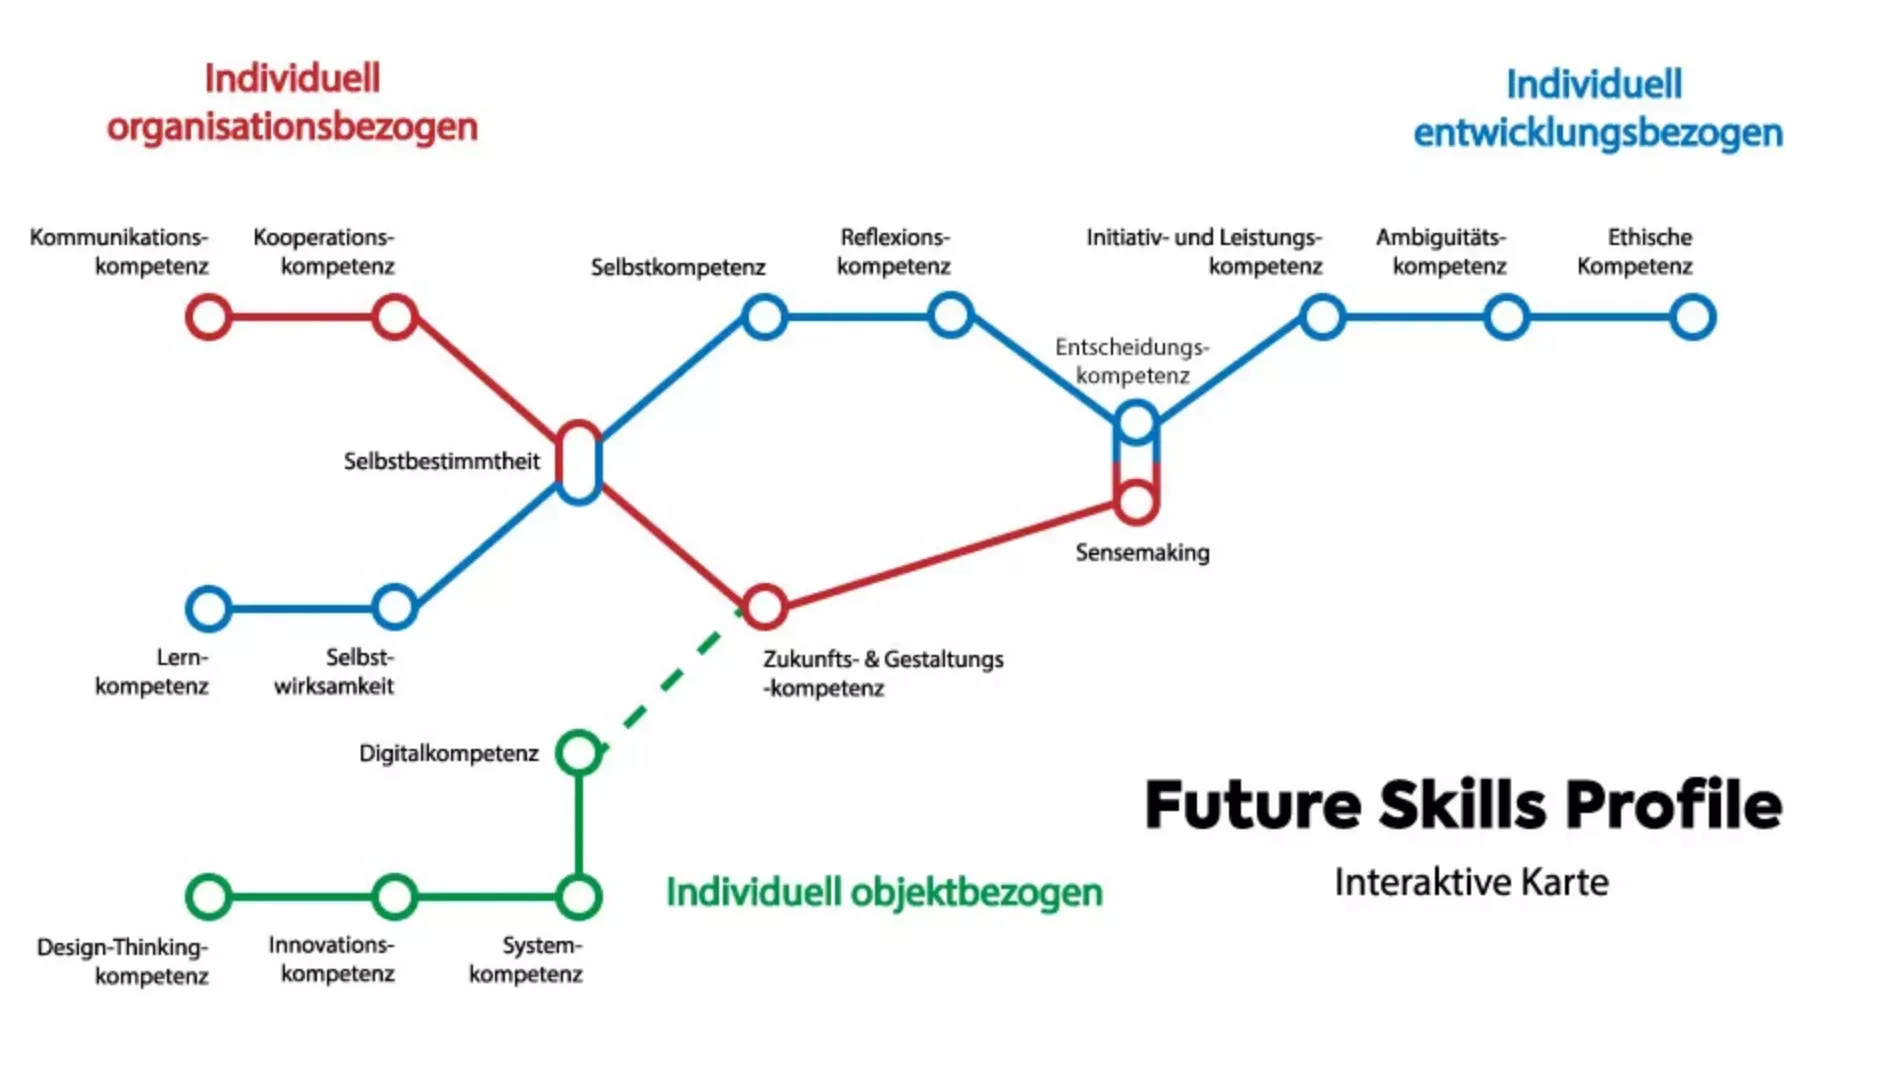 Future Skills Profile (Interaktive Karte).